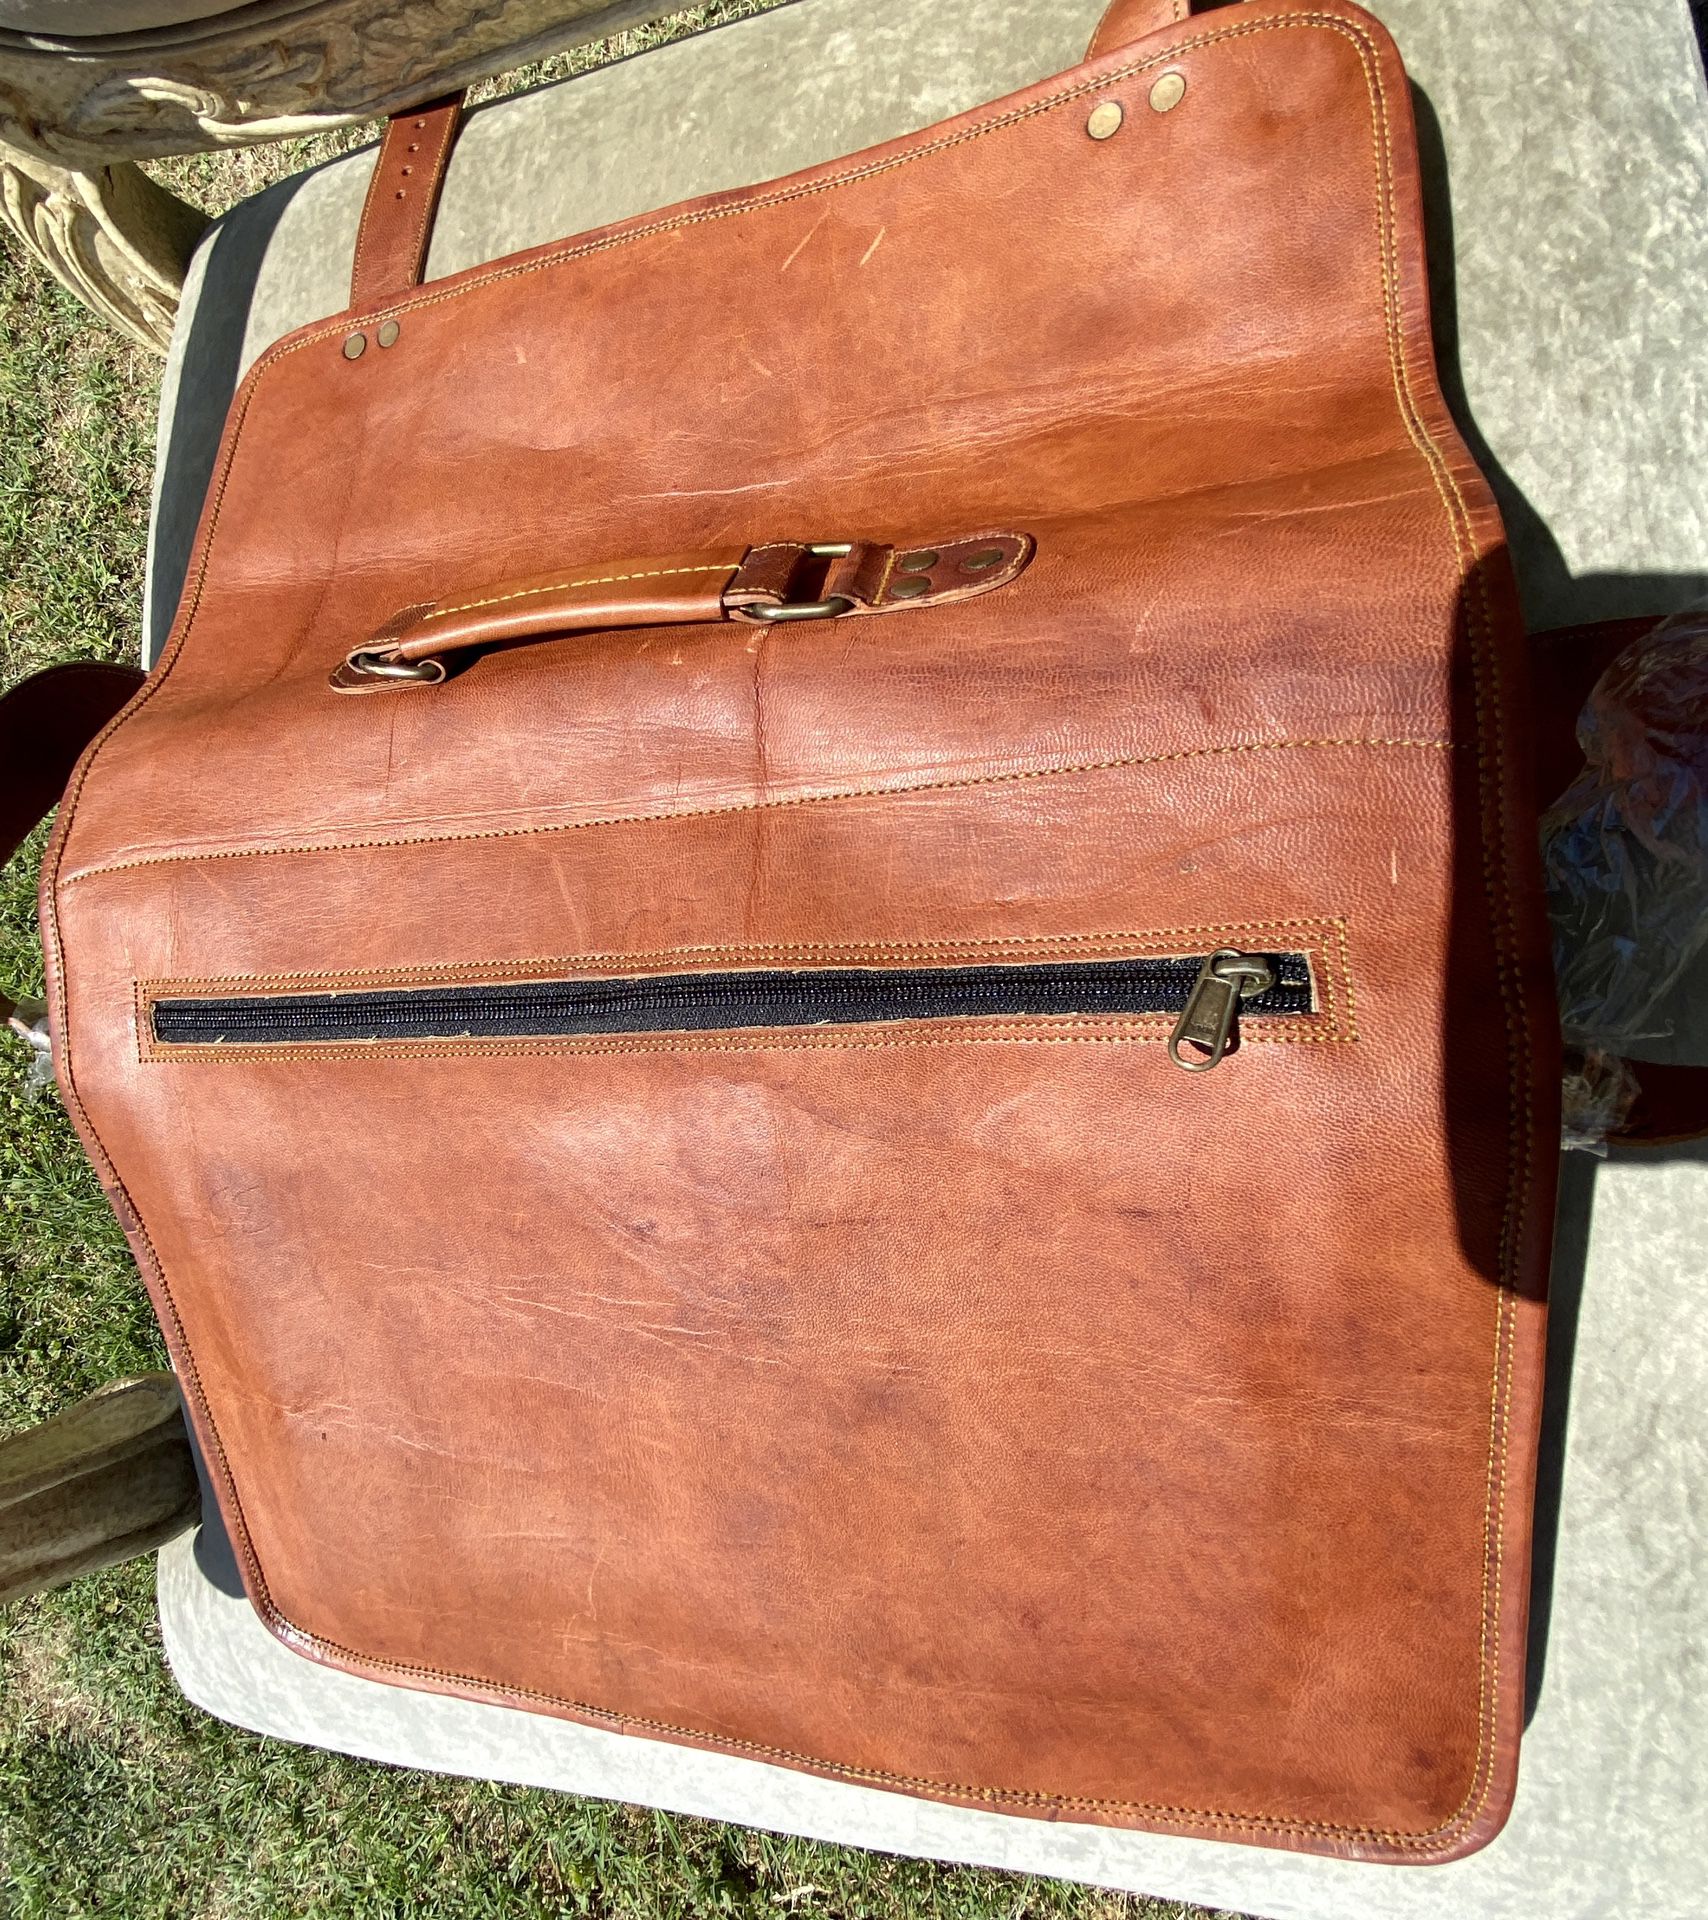 Komal’s Passion leather satchel